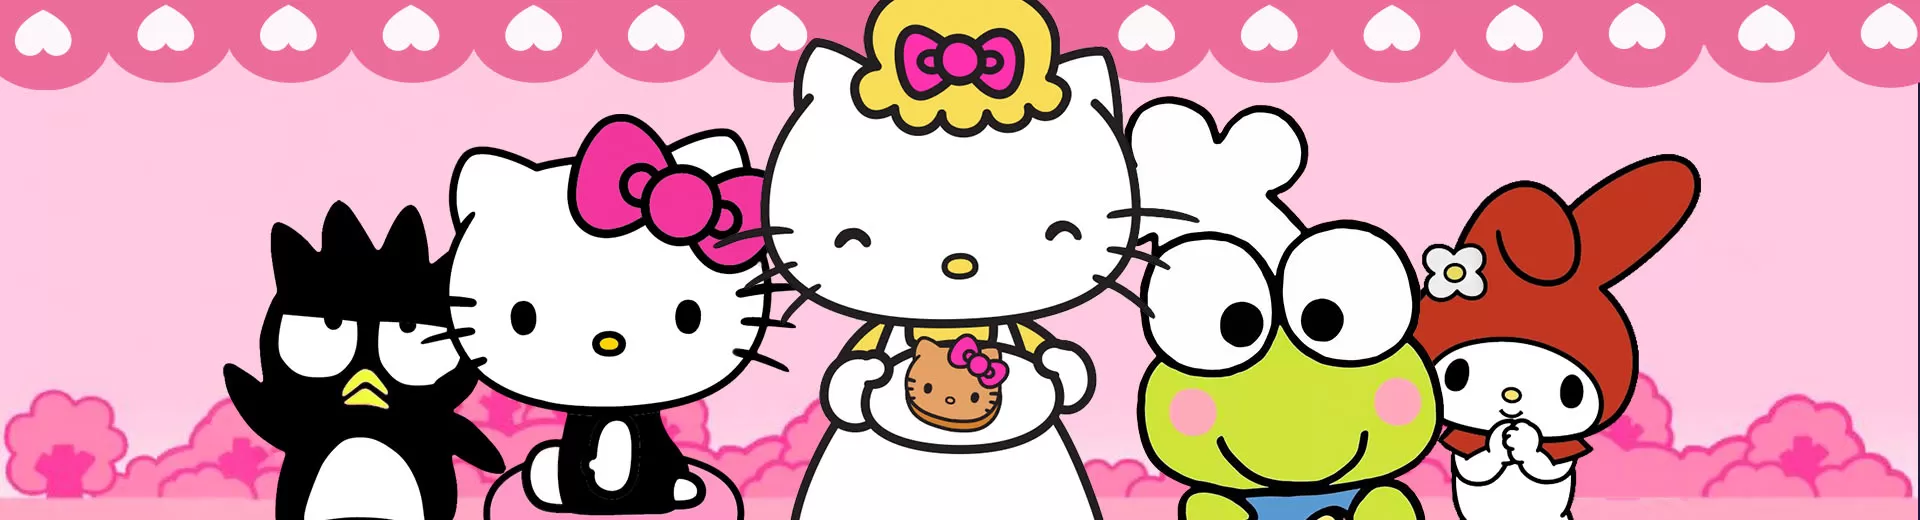 Hello Kitty Cafe Emulator Pc